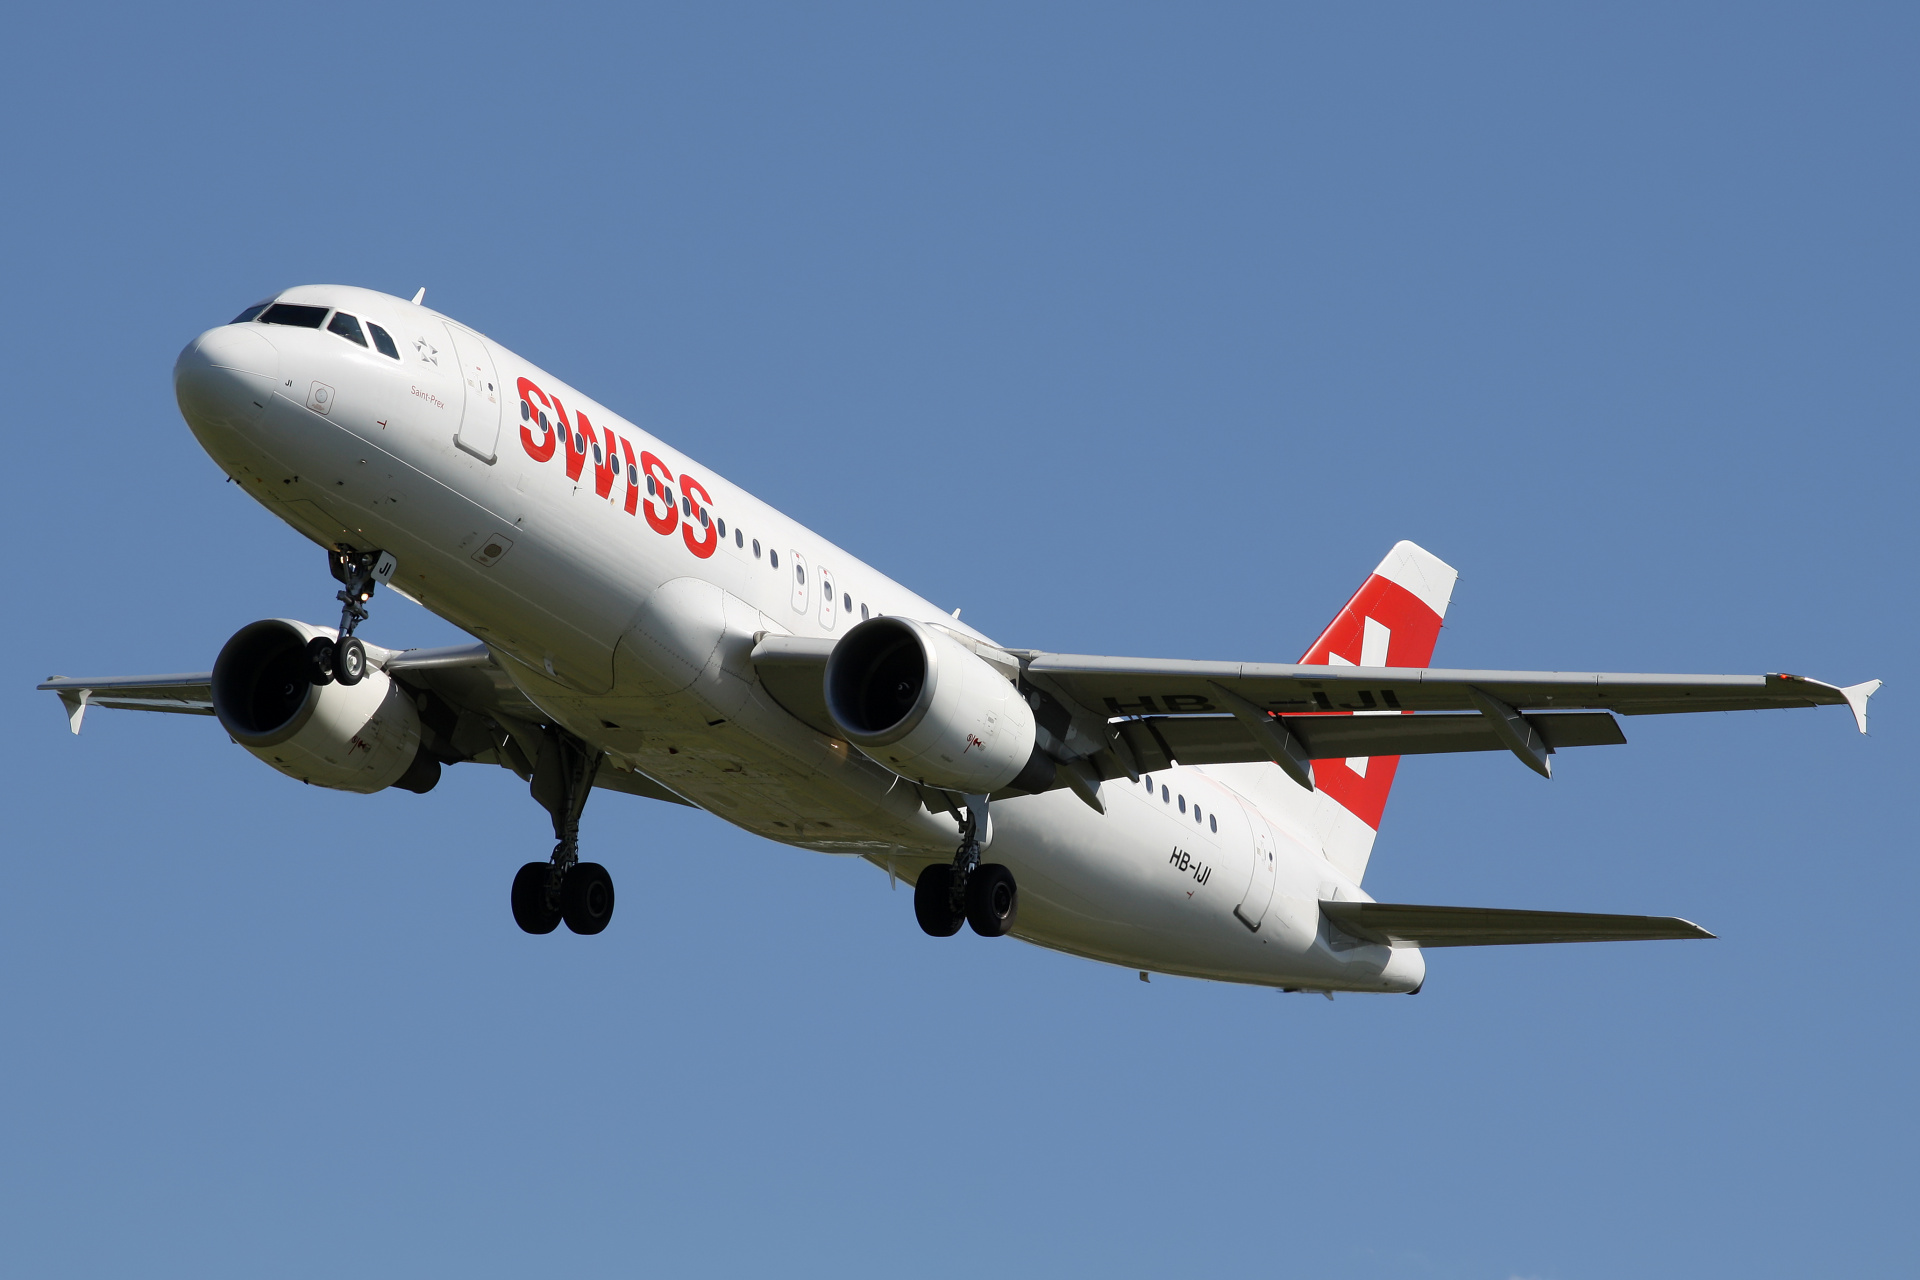 HB-IJI (Aircraft » EPWA Spotting » Airbus A320-200 » Swiss International Air Lines)